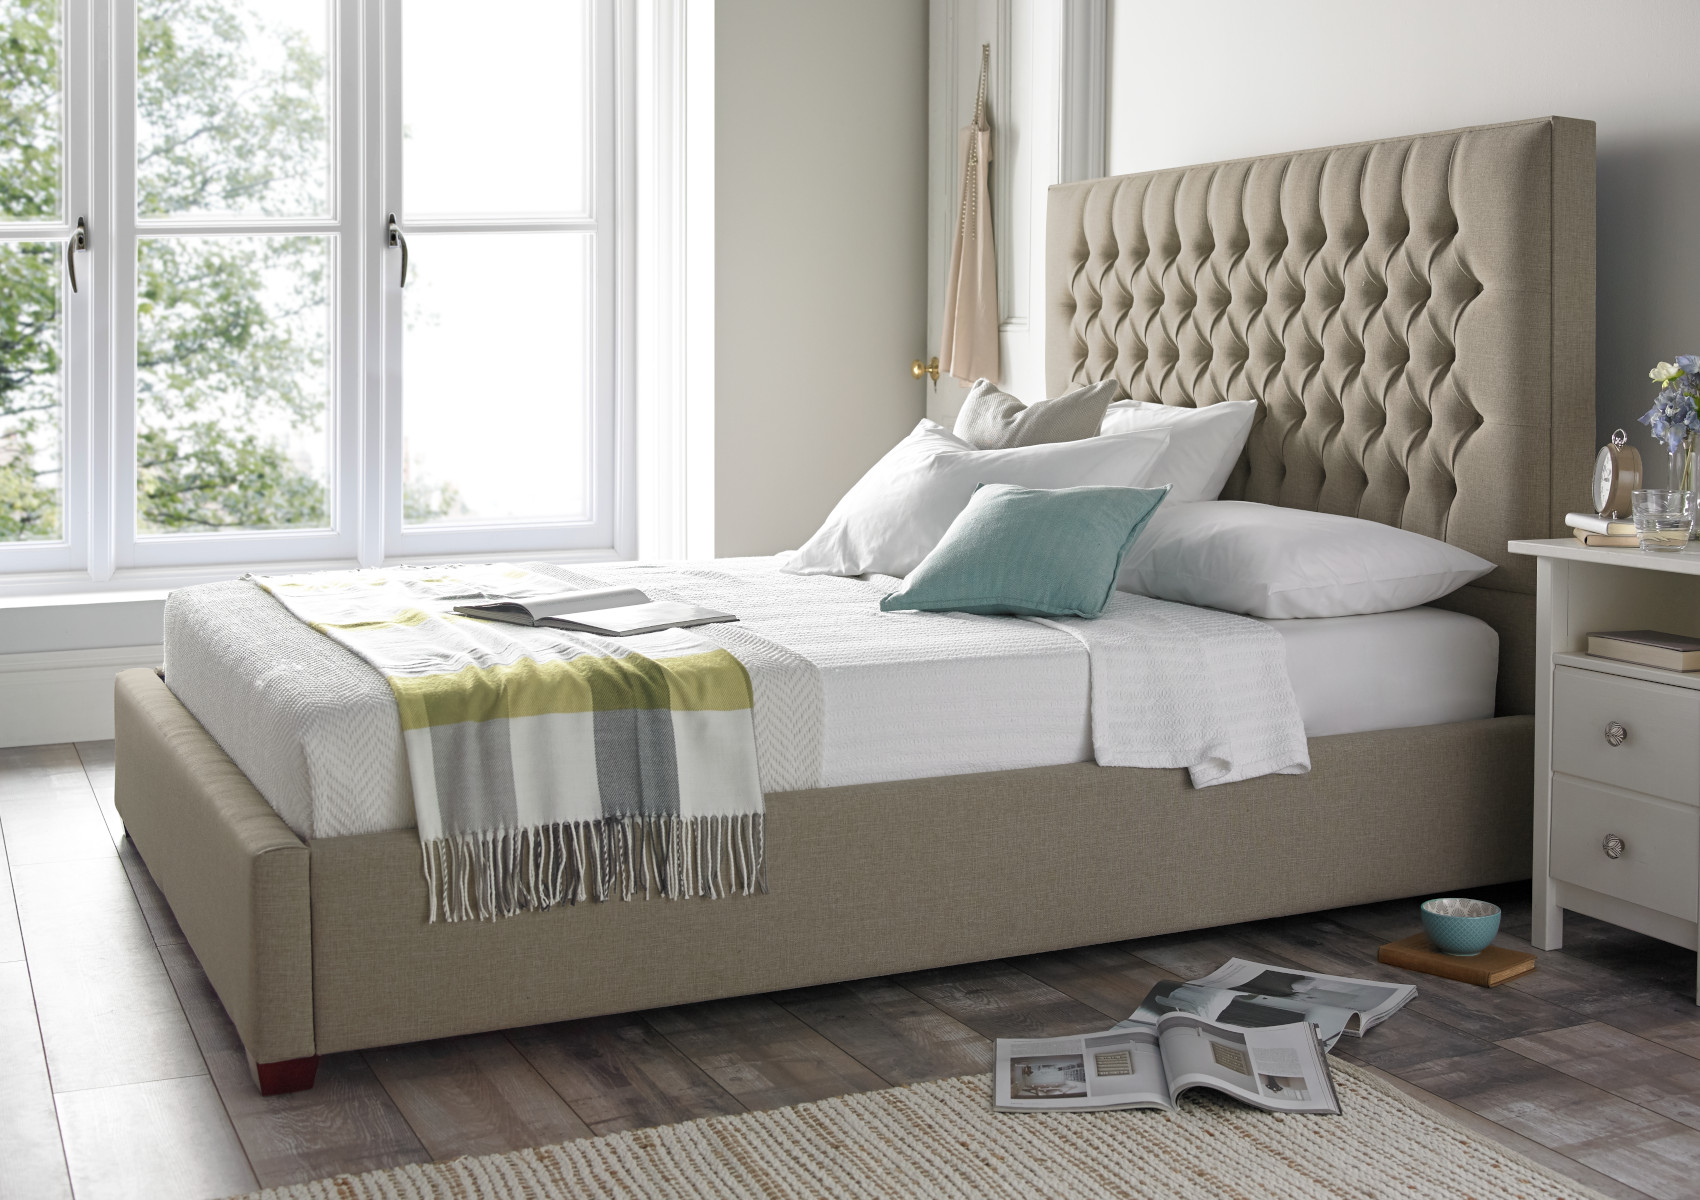 View Belgravia Shetland Mercury Upholstered Super King Bed Time4Sleep information